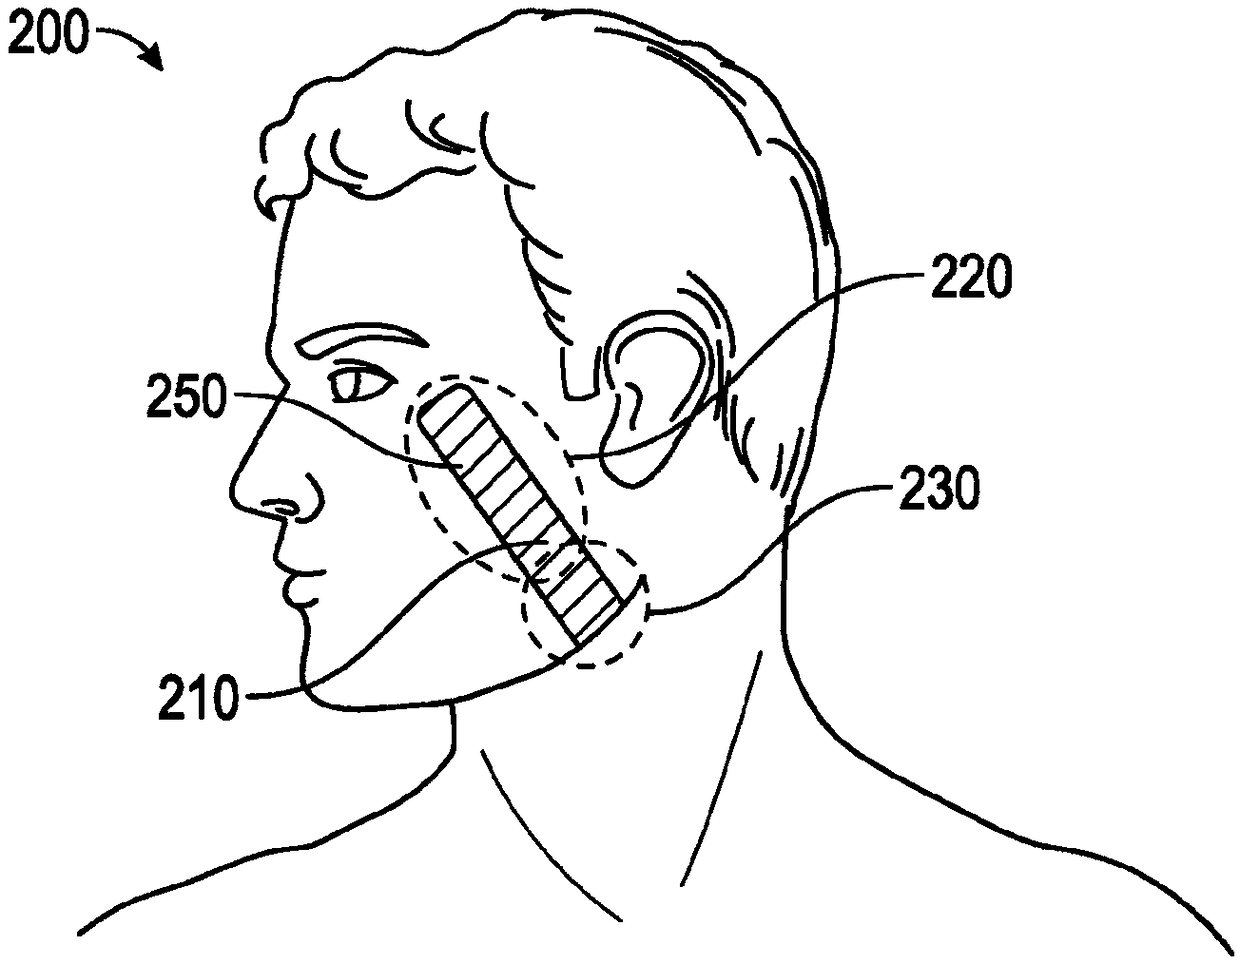 Method and apparatus for mandibular support